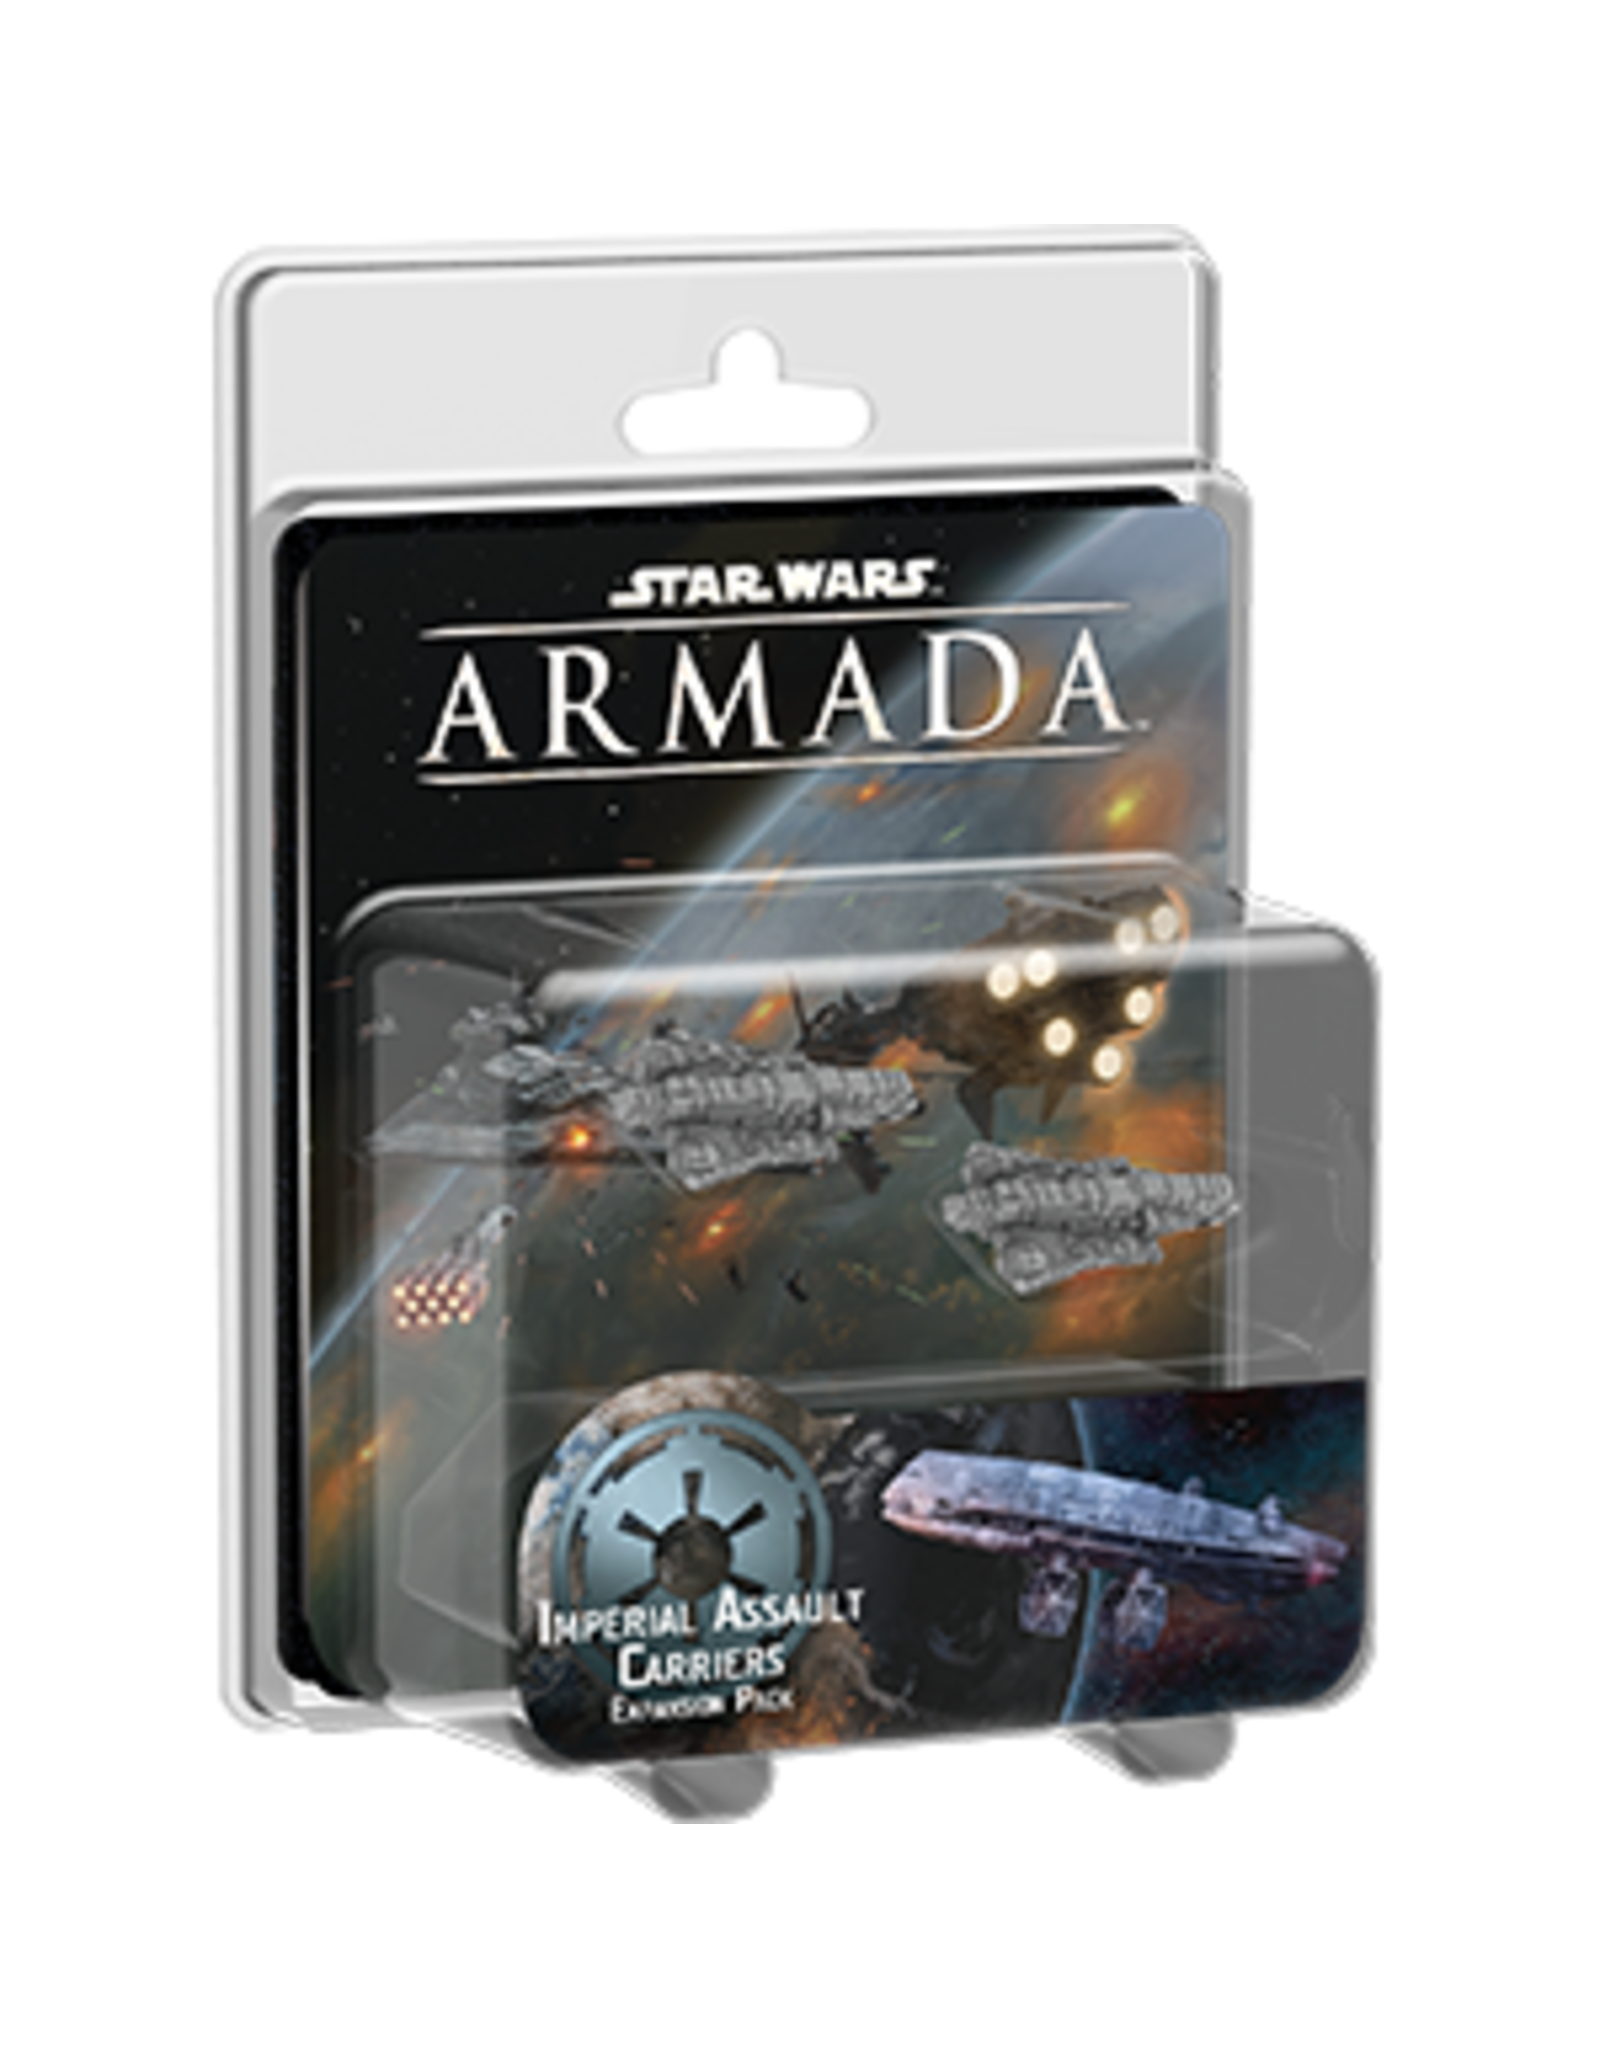 Star Wars Armada Star Wars Armada Imperial Assault Carriers